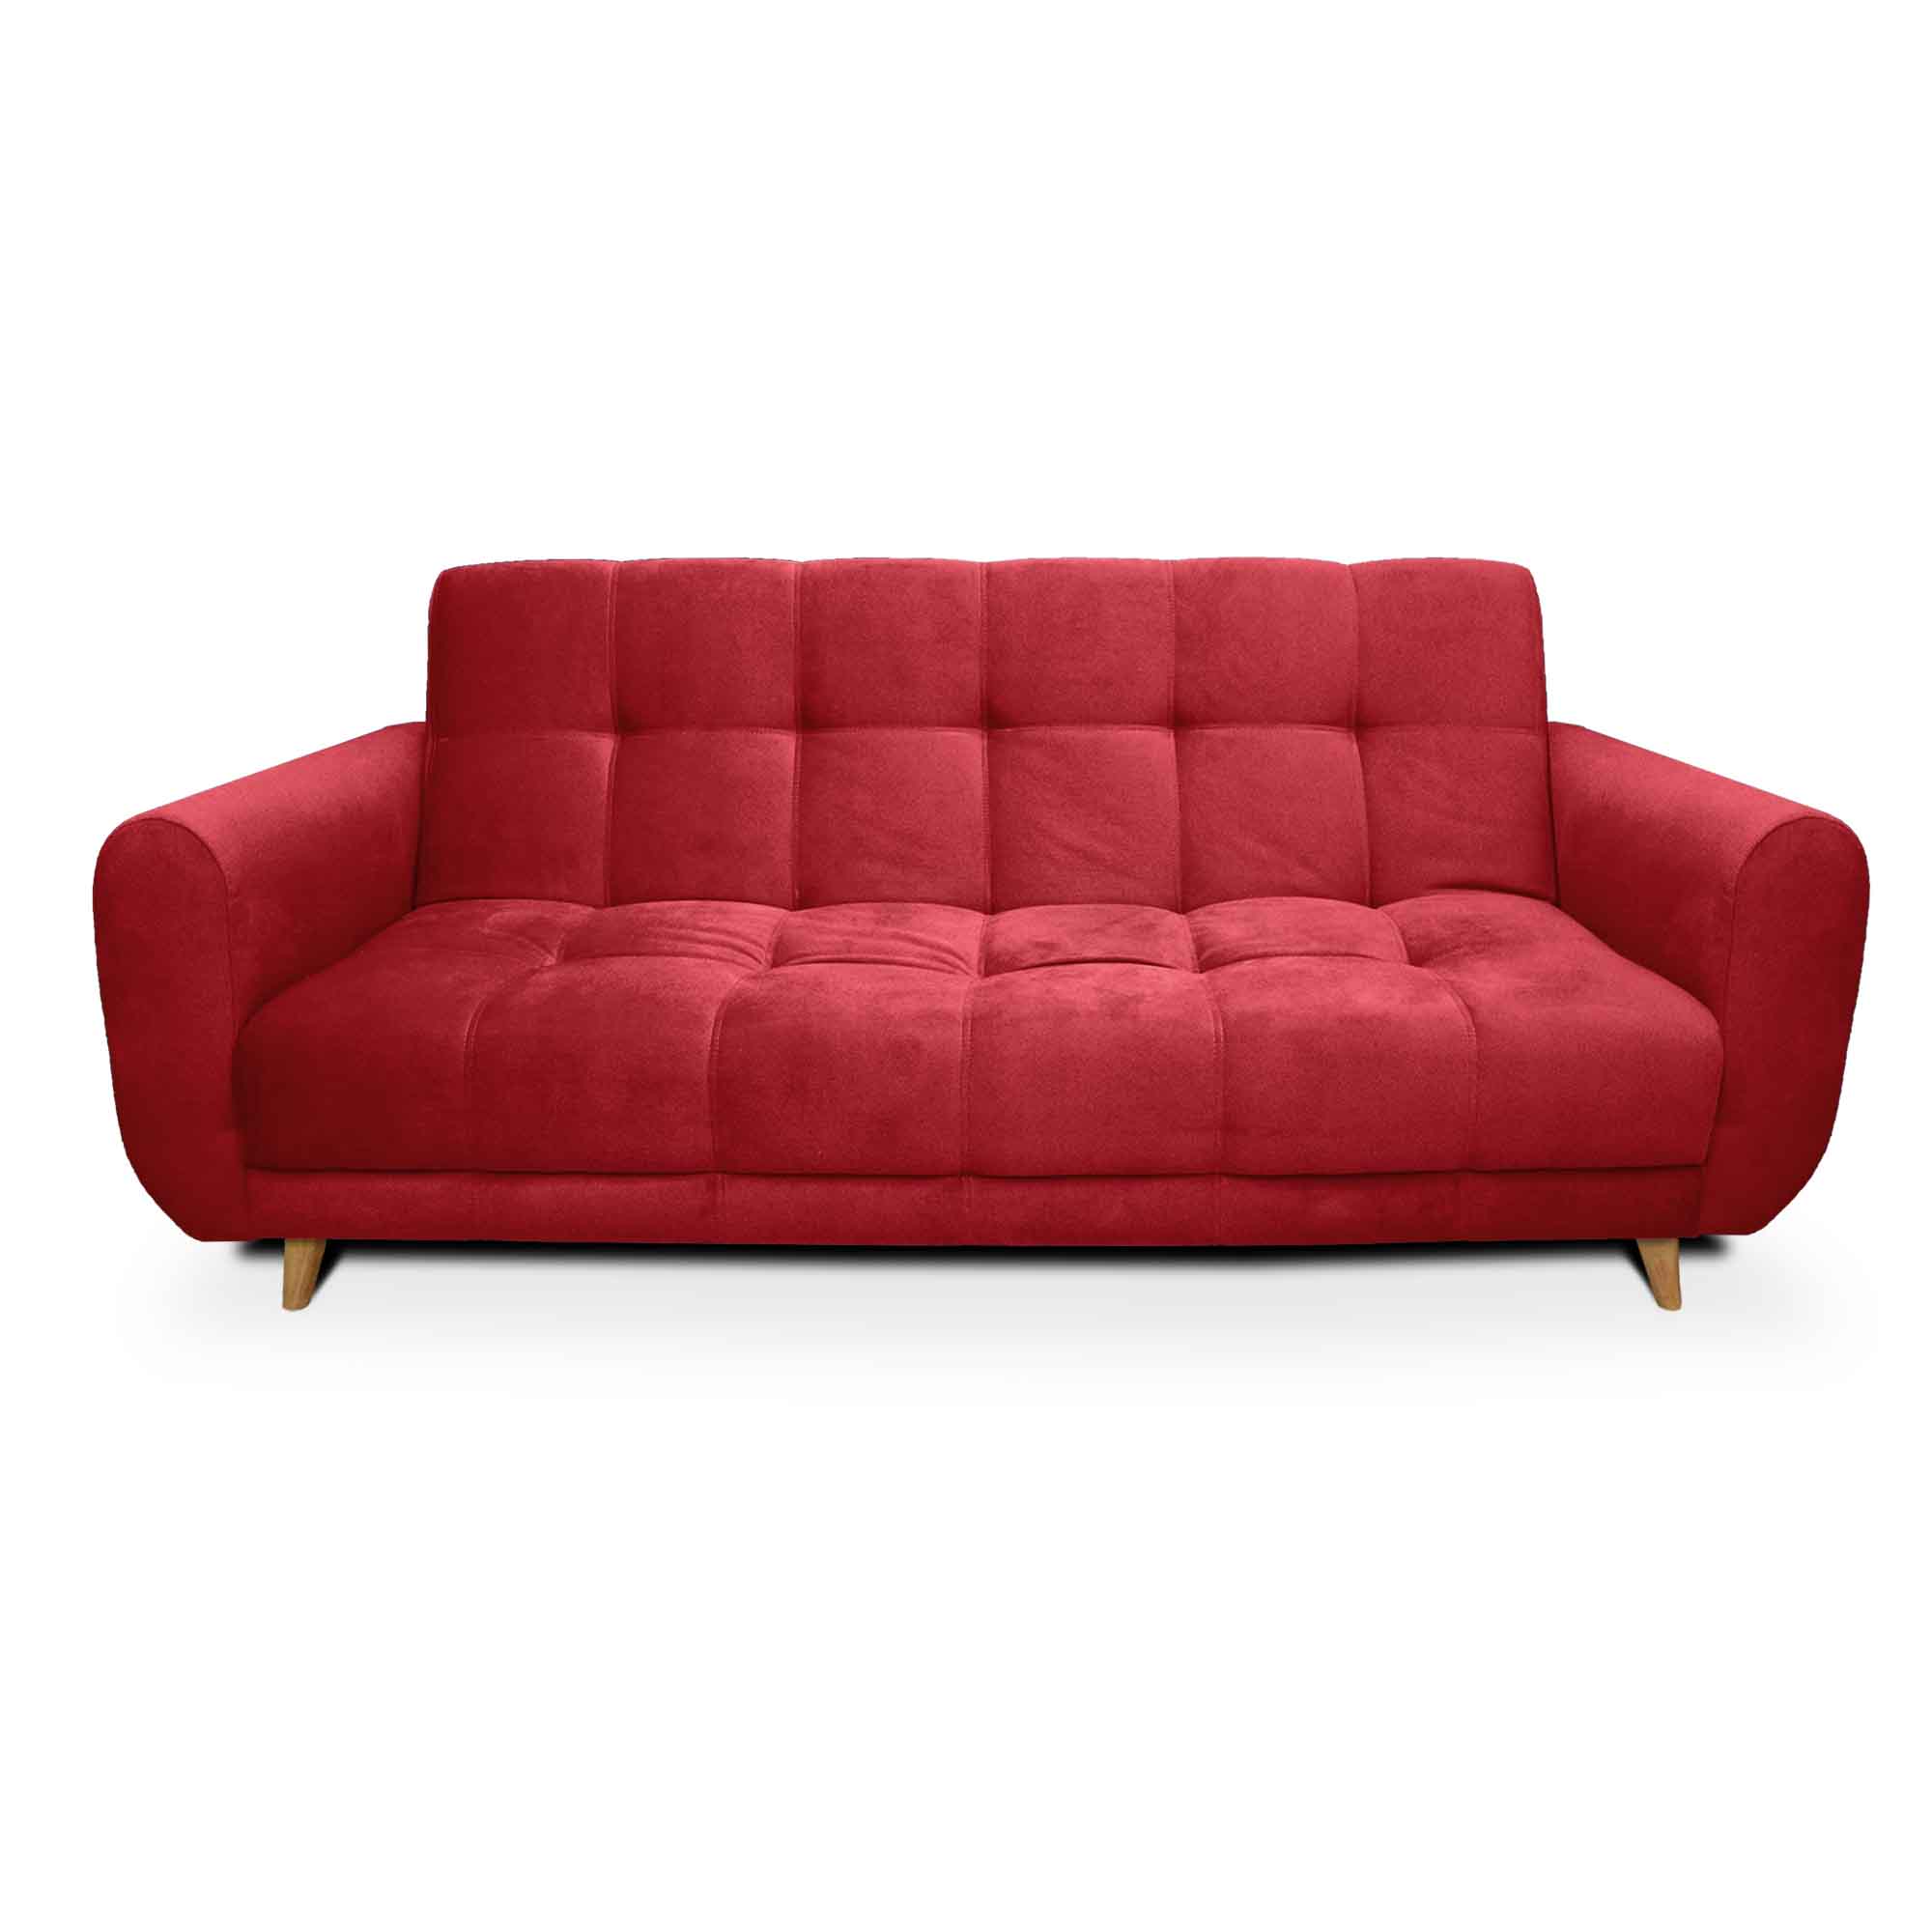 Sofa Cama Comfort Sistema Clic Clac Color Rojo